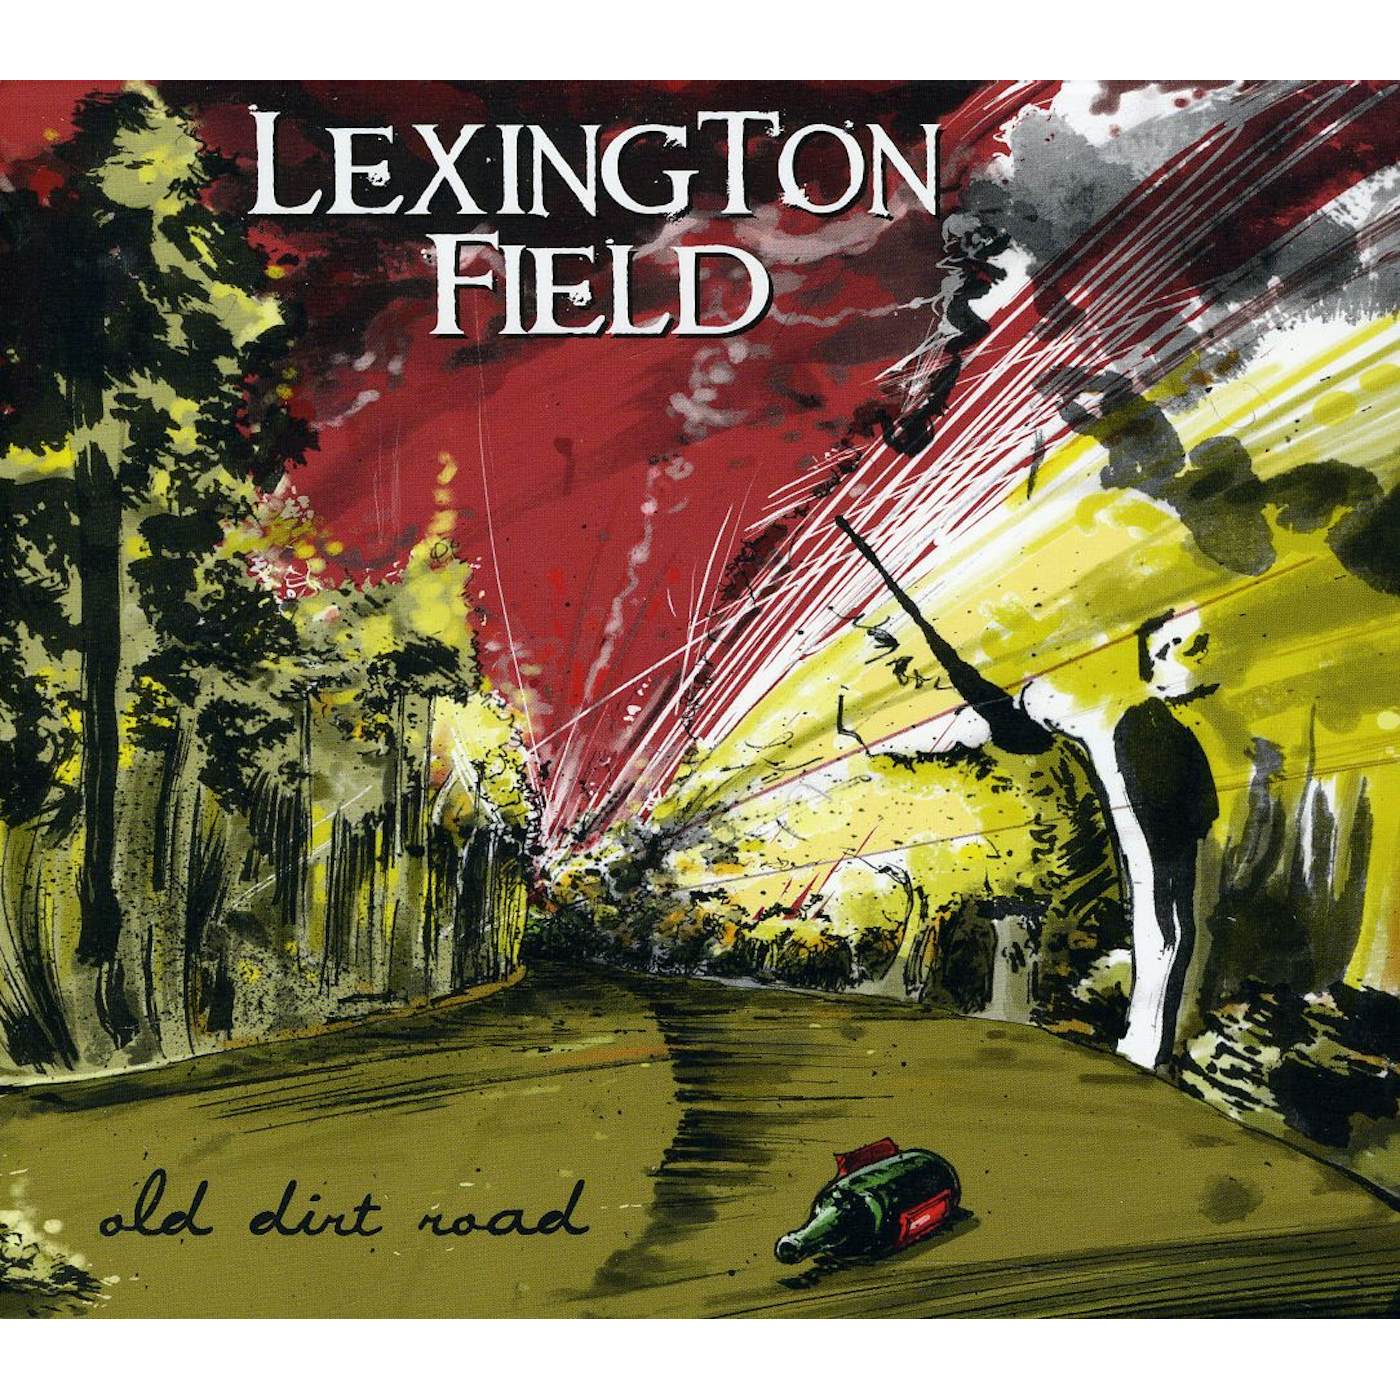 Lexington Field OLD DIRT ROAD CD